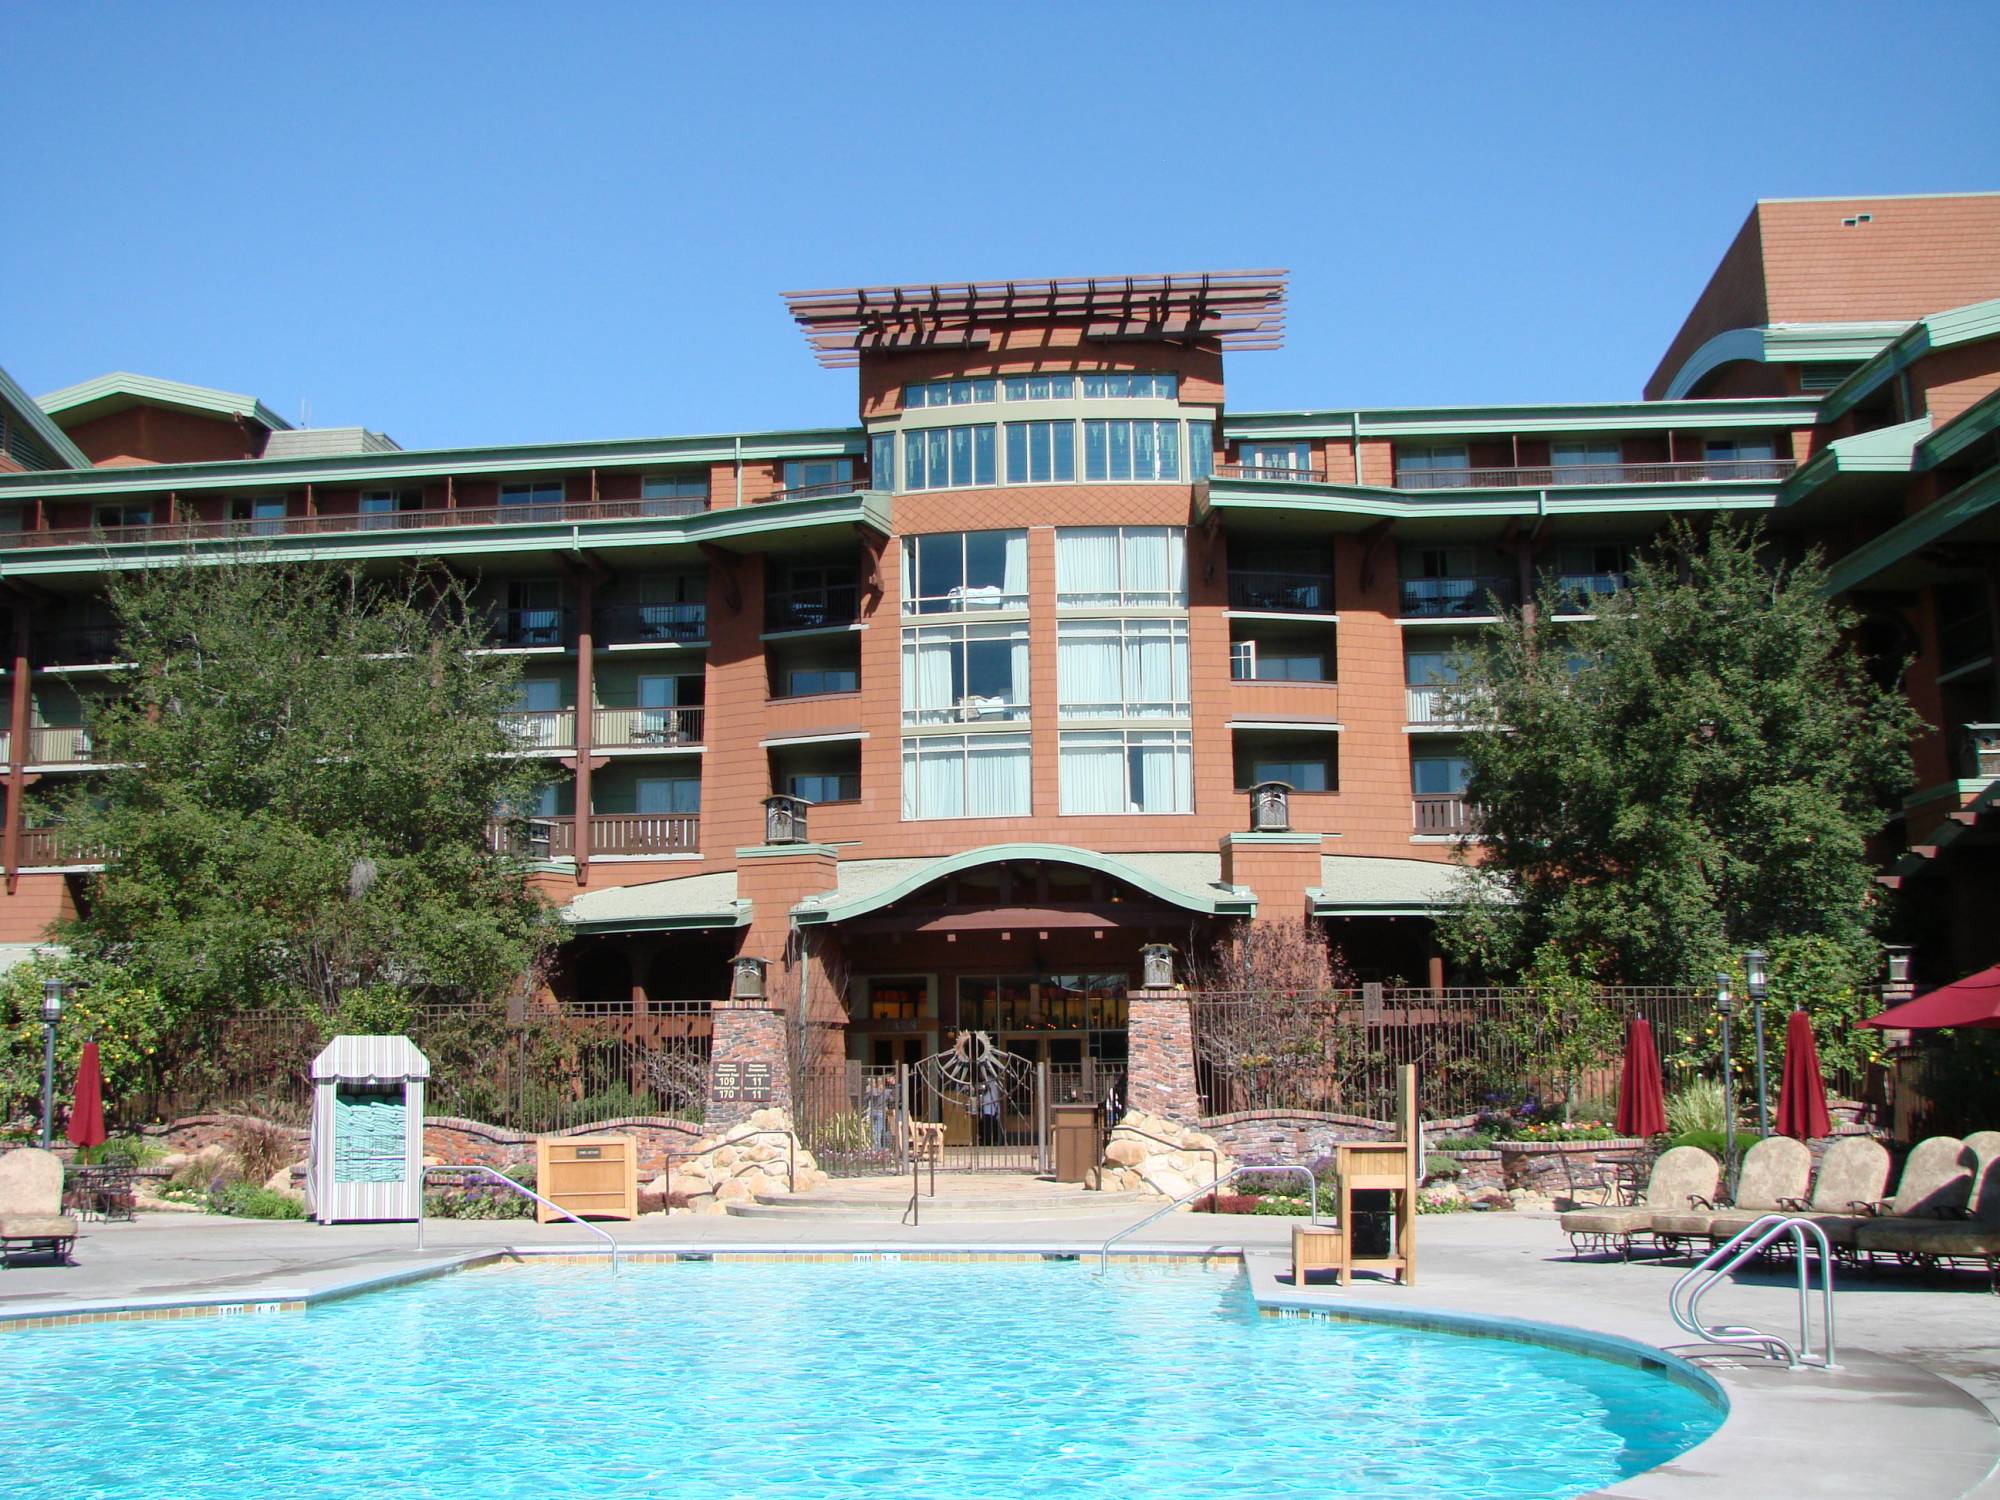 Grand Californian--Main Pool with Main Building